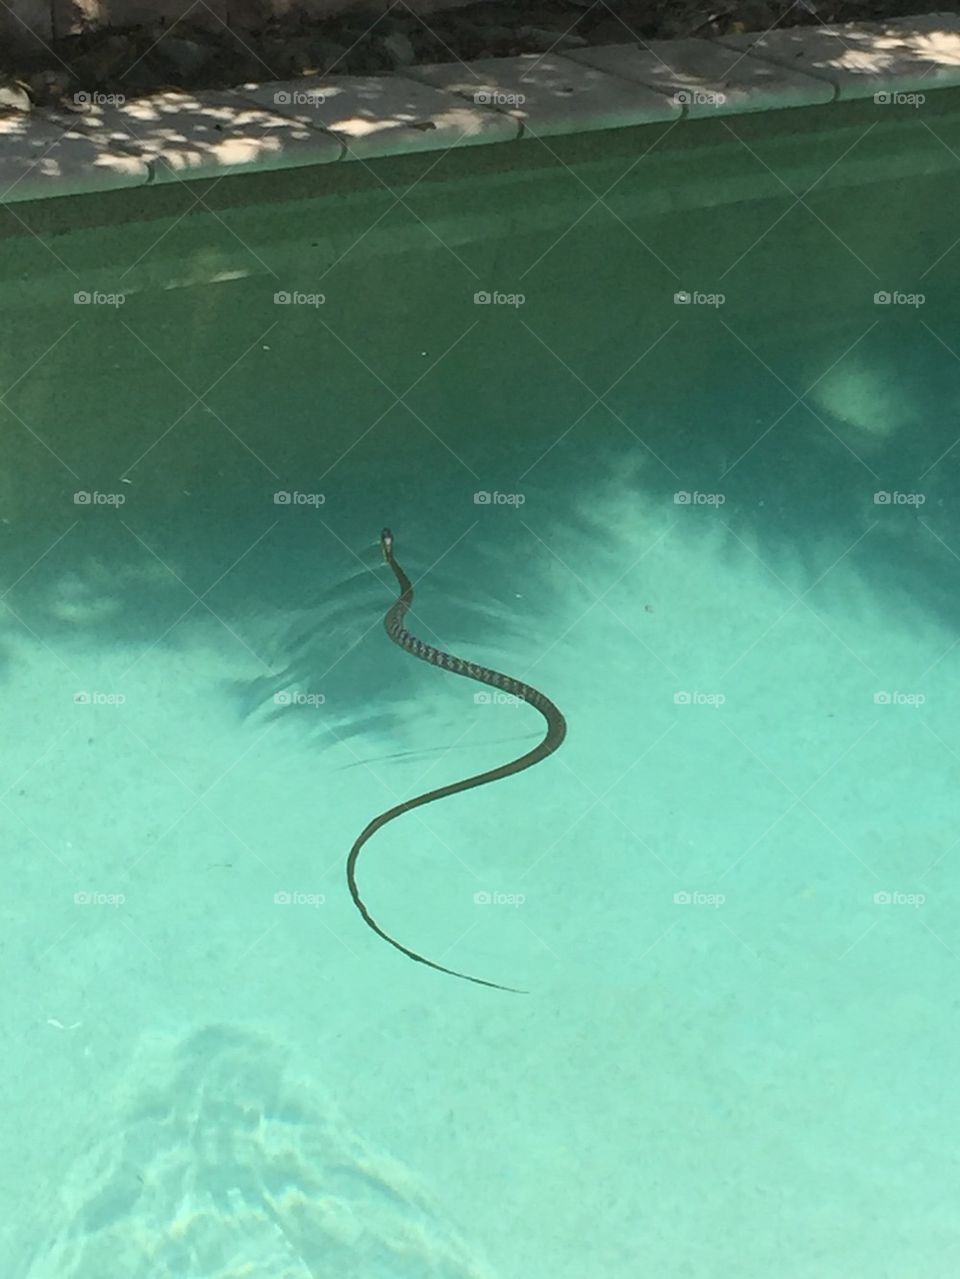 Snake in my pool